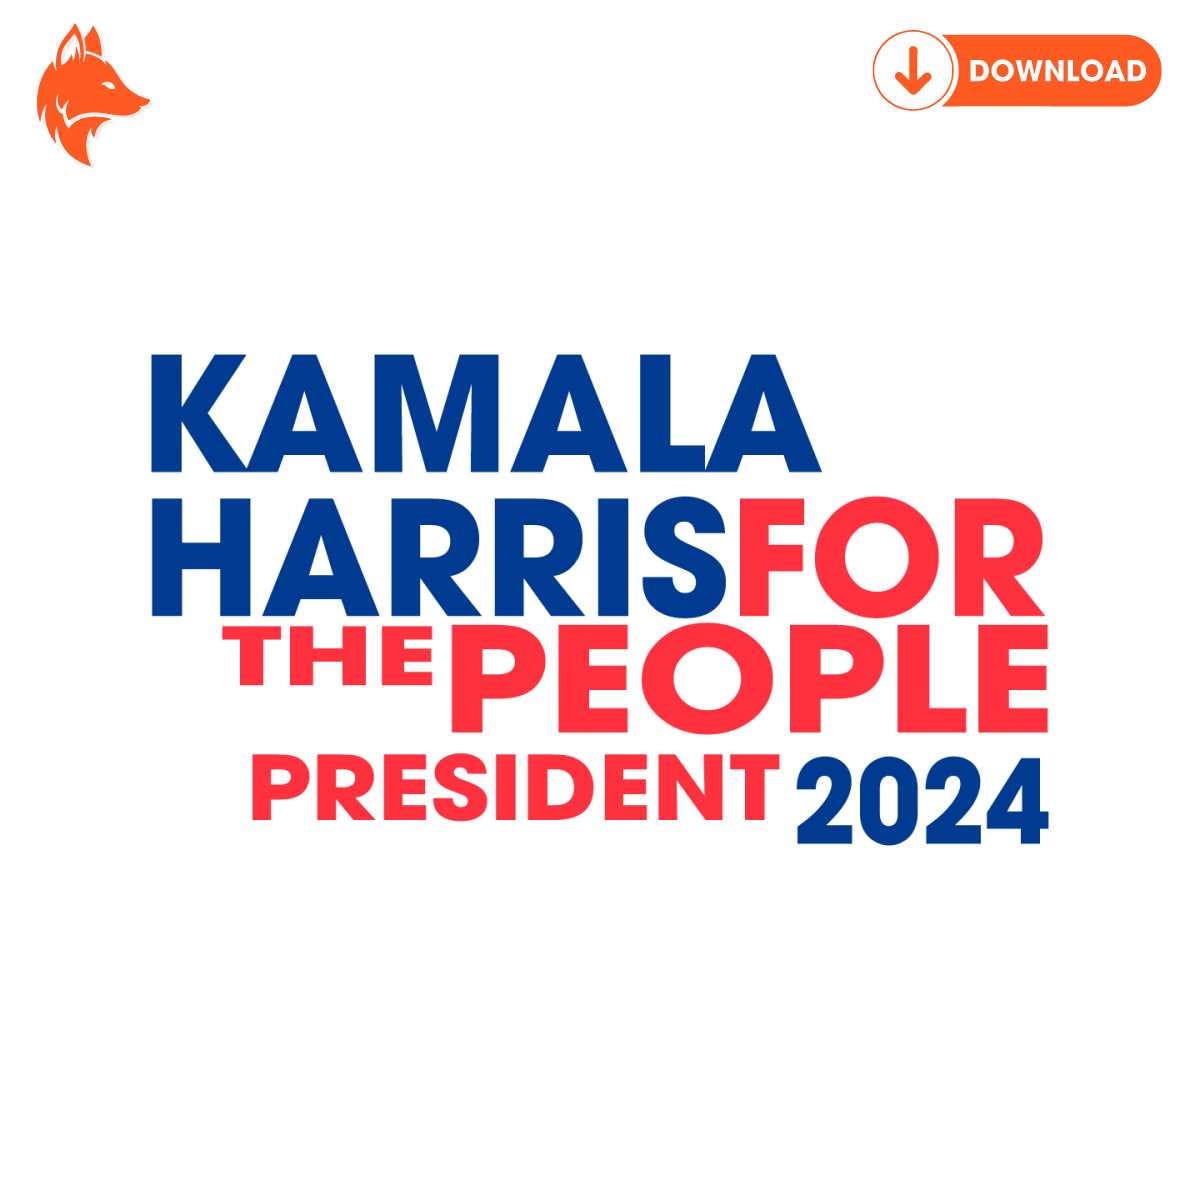 Free Kamala Harris For The People President 2024 SVG